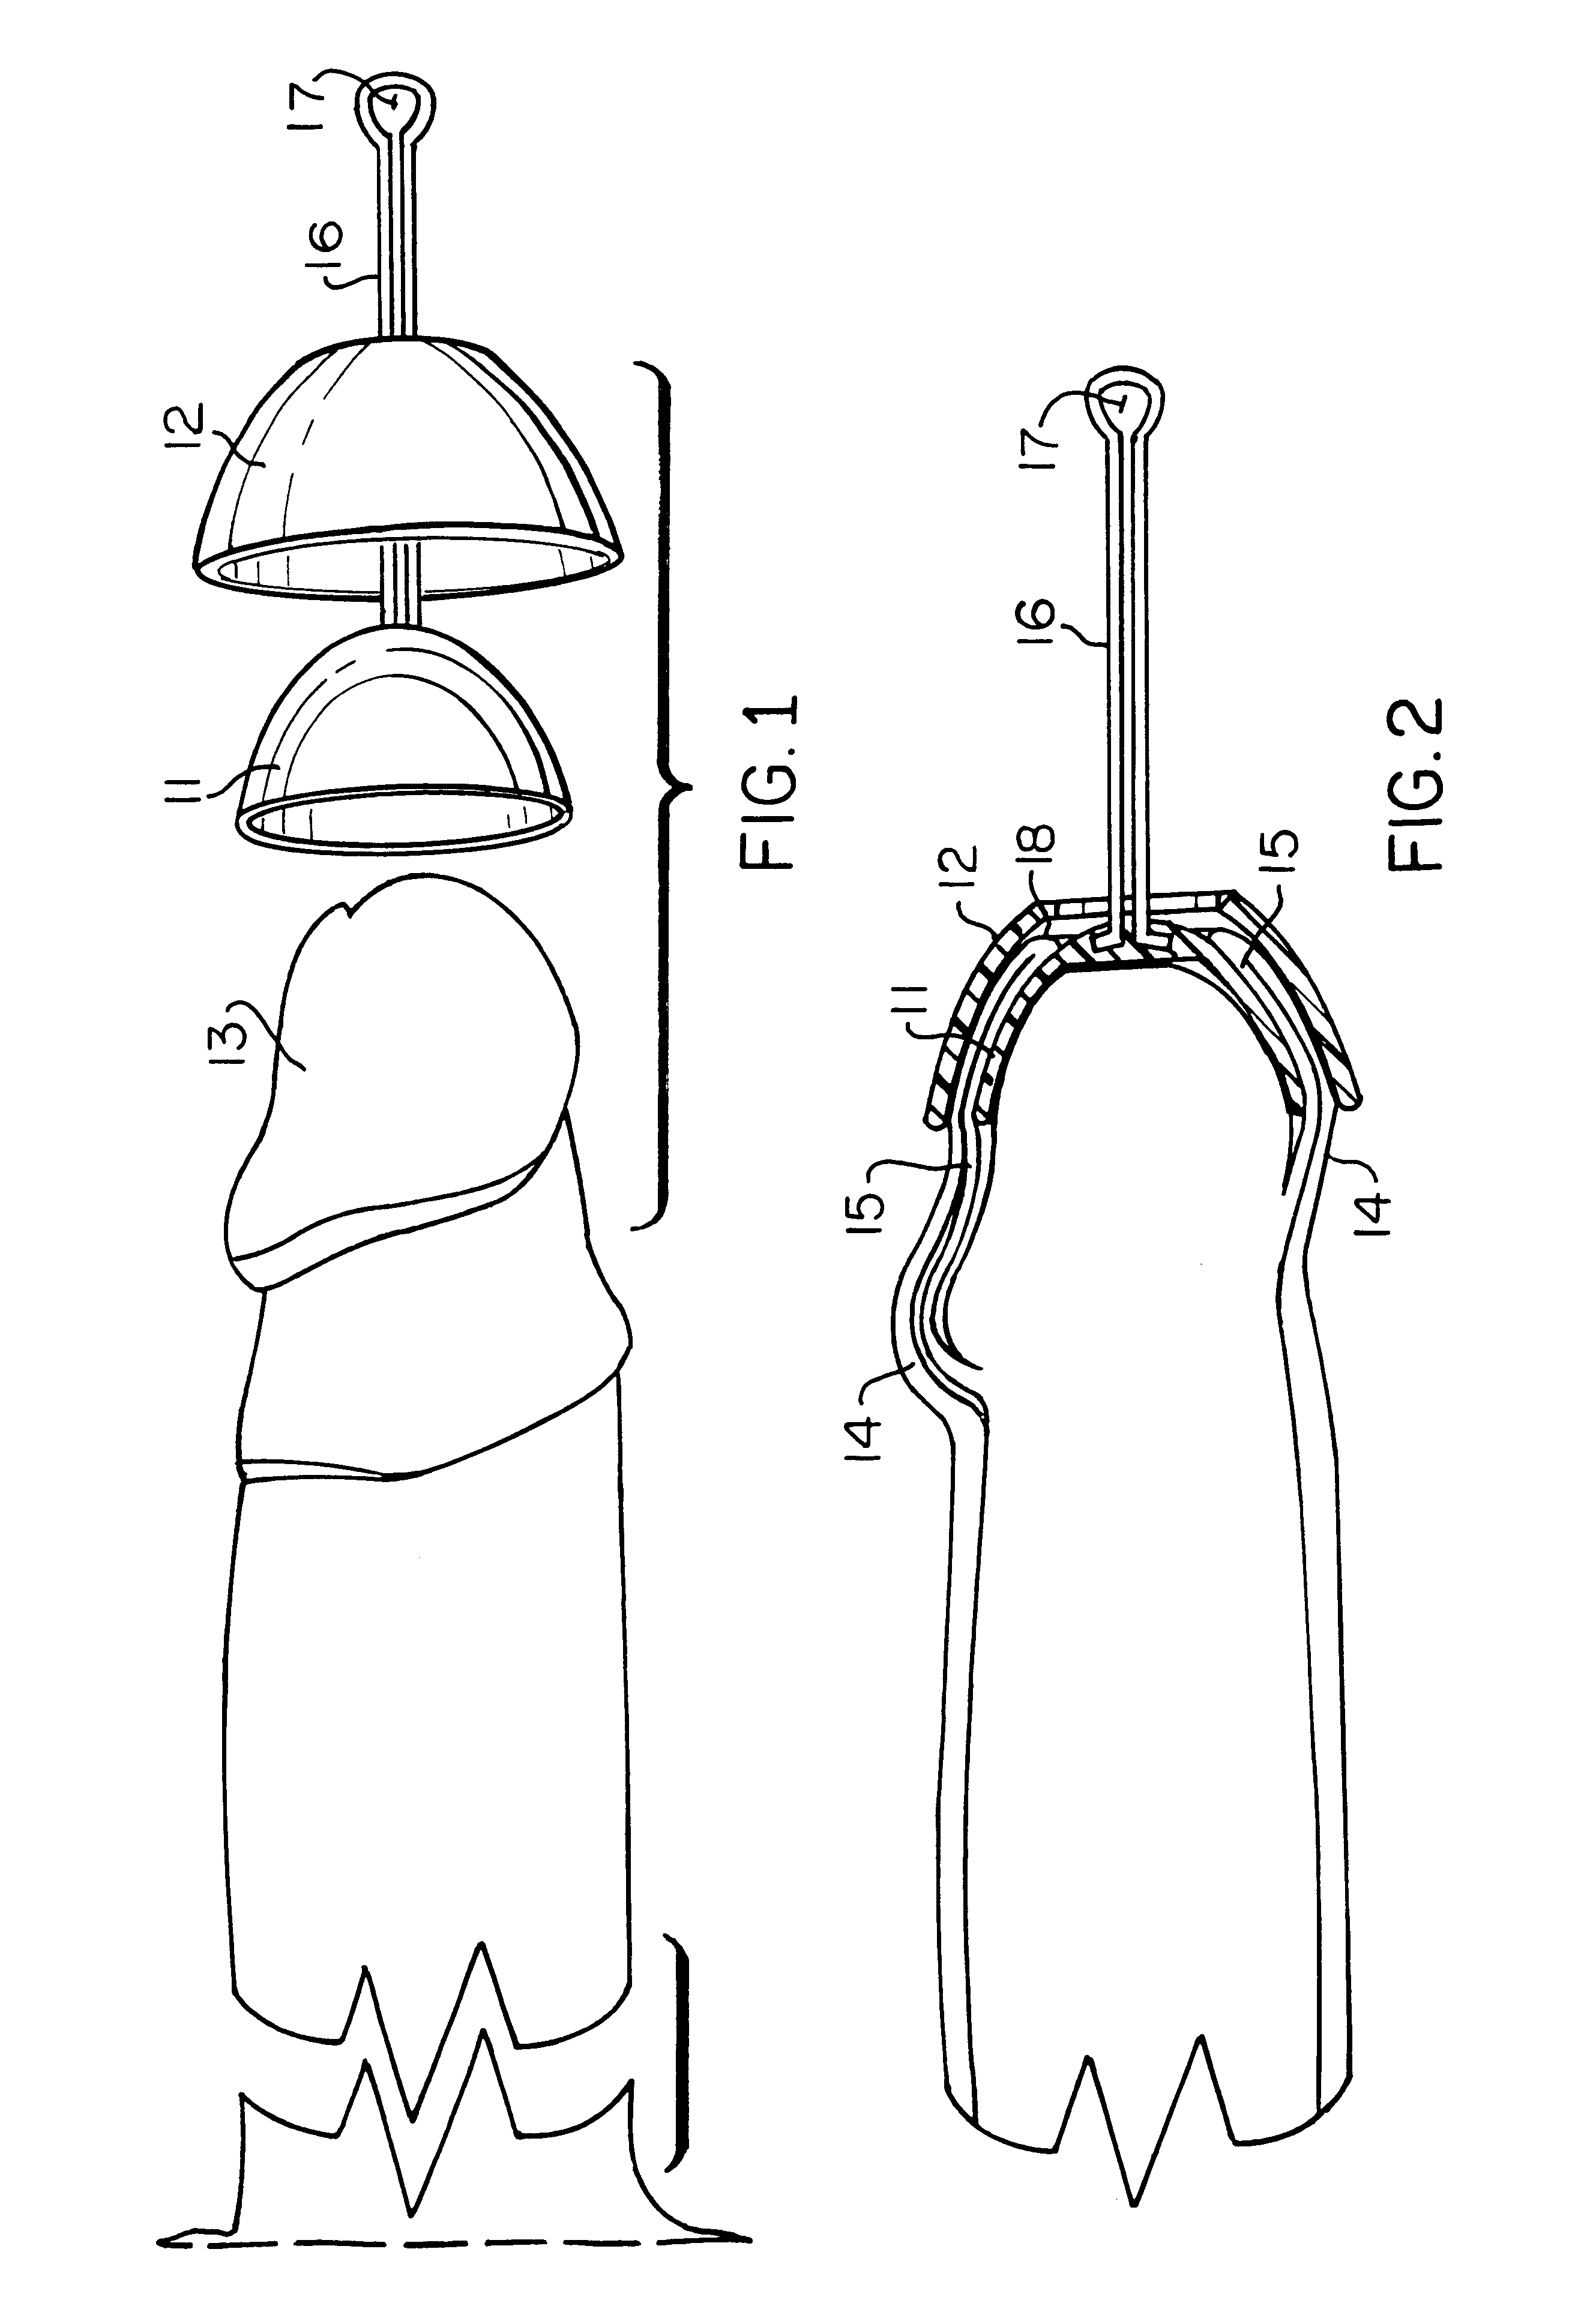 Foreskin restoration device